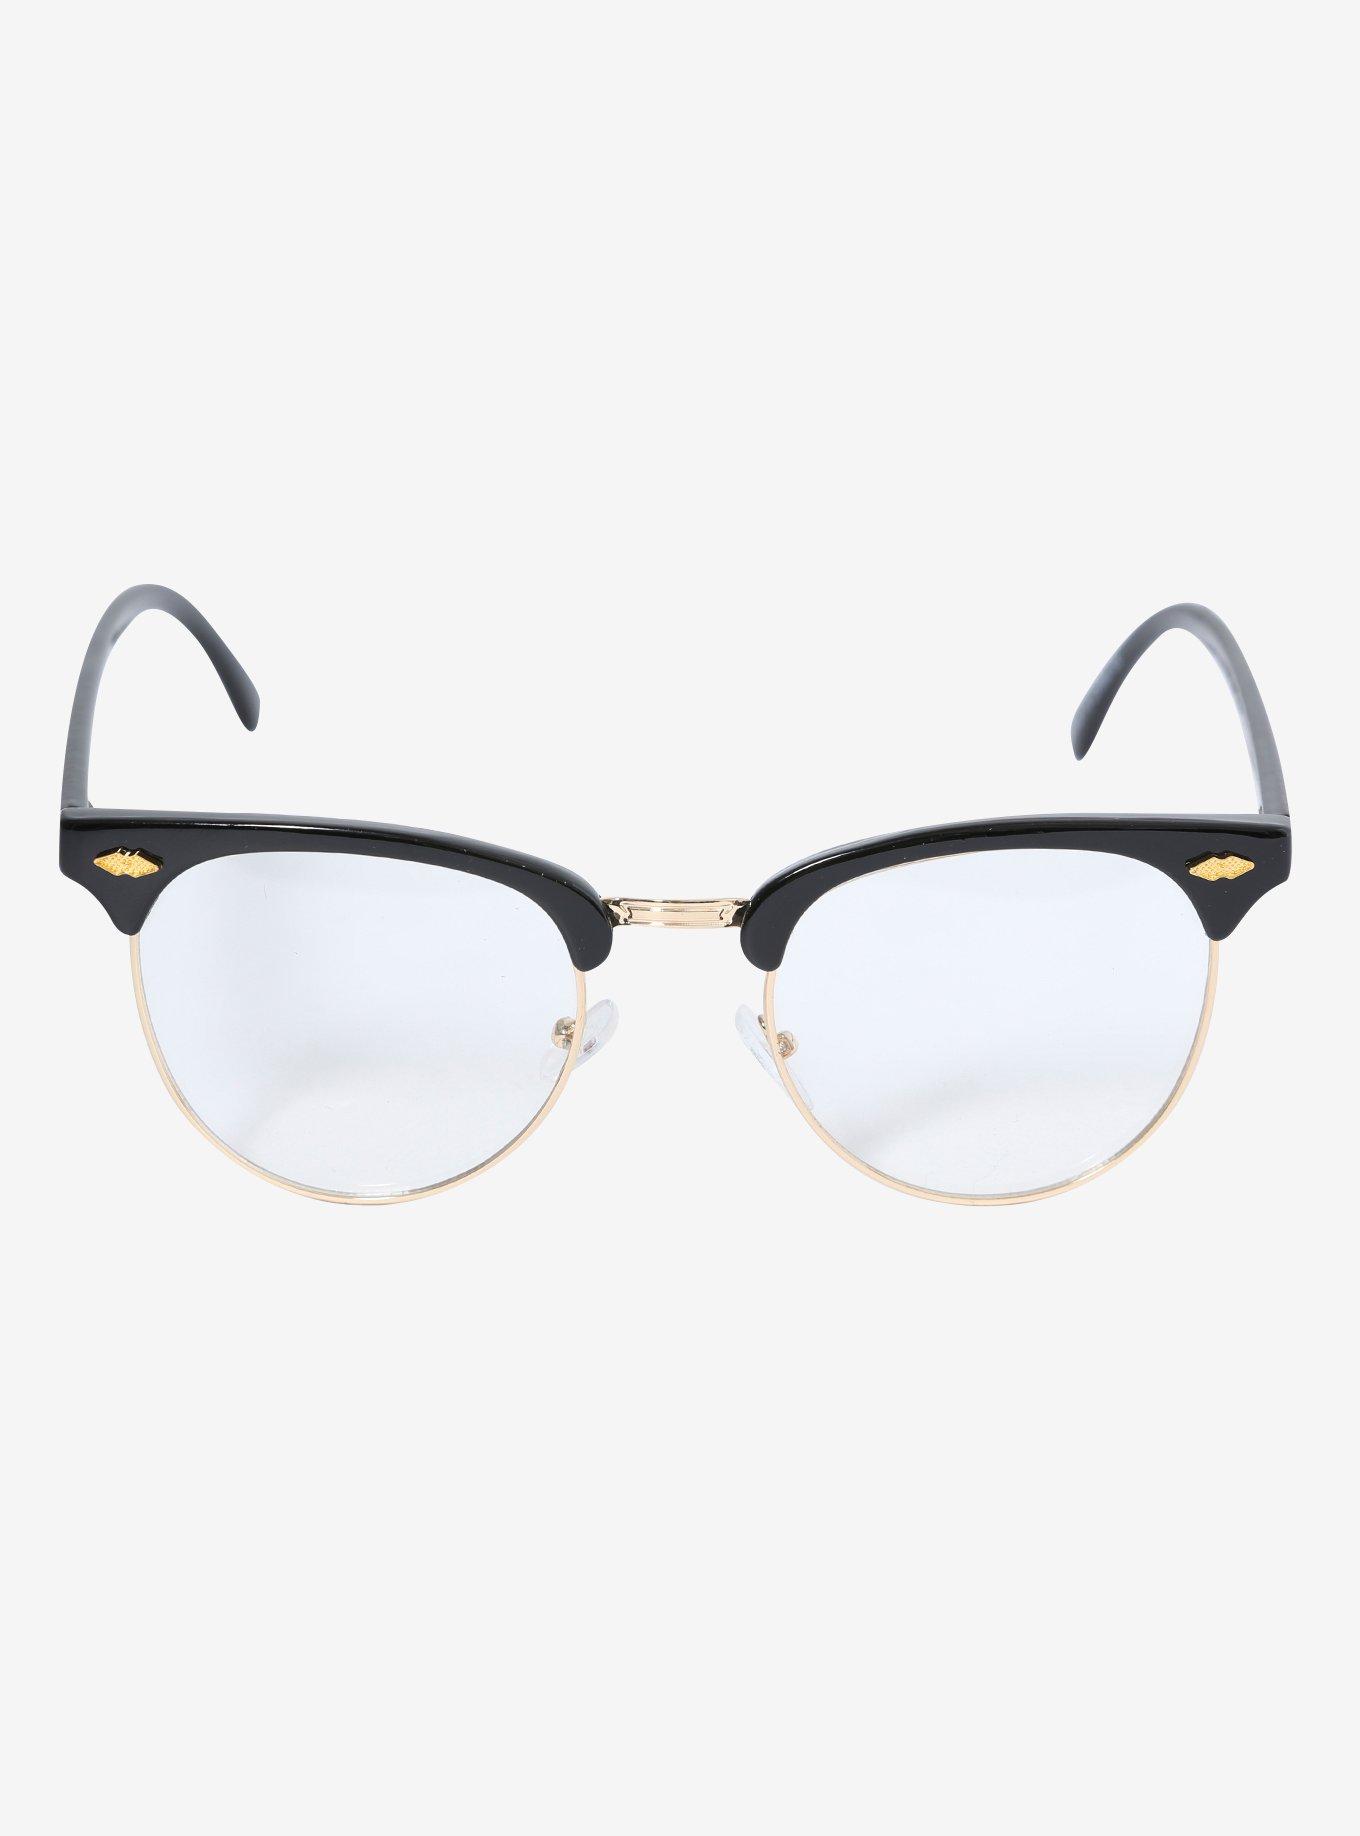 Black & Gold Half-Rim Clear Lens Glasses, , alternate